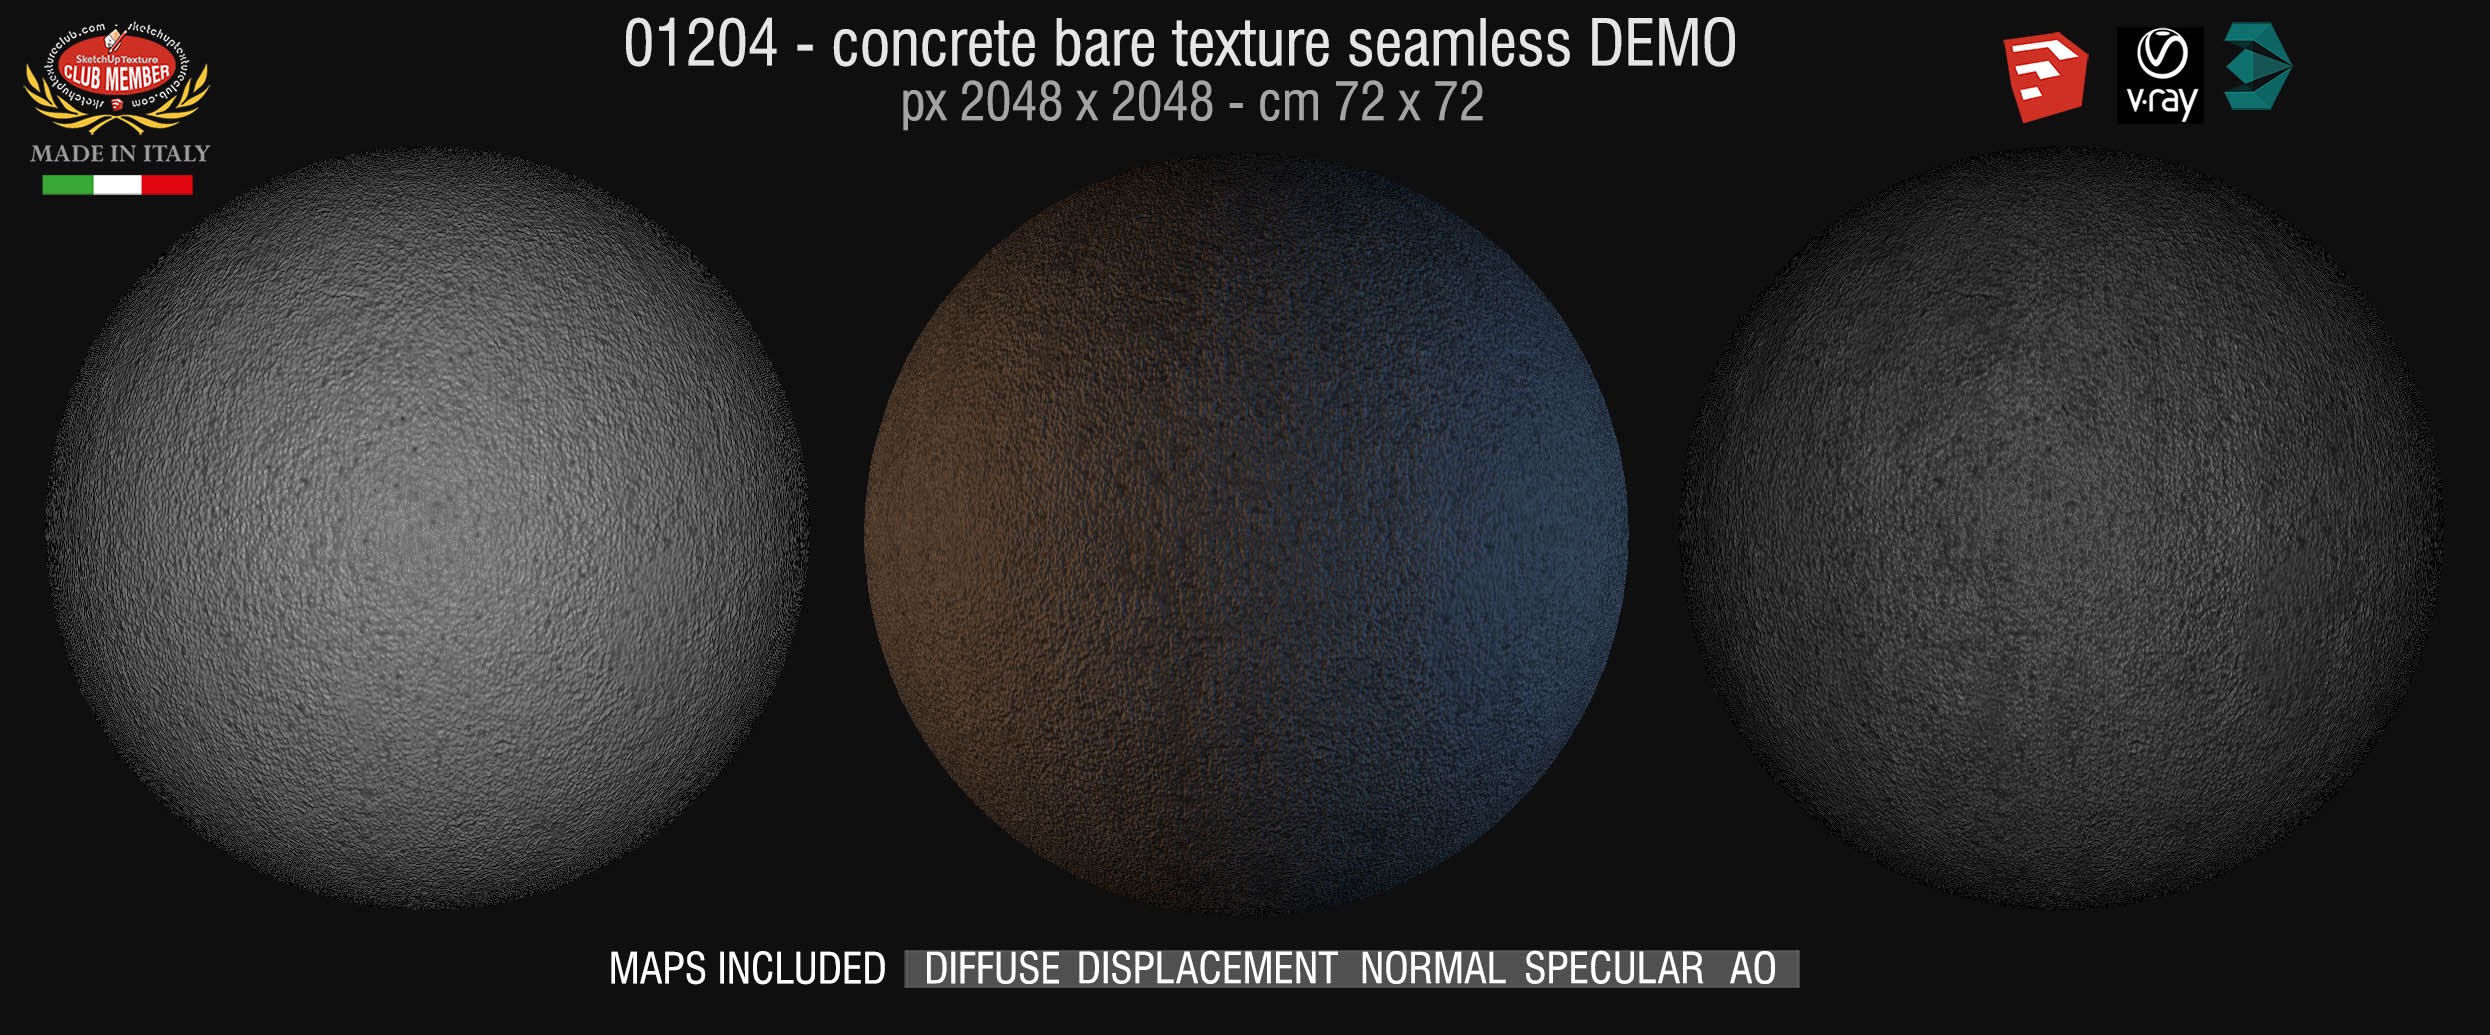 01204 HR Concrete bare clean texture + maps DEMO